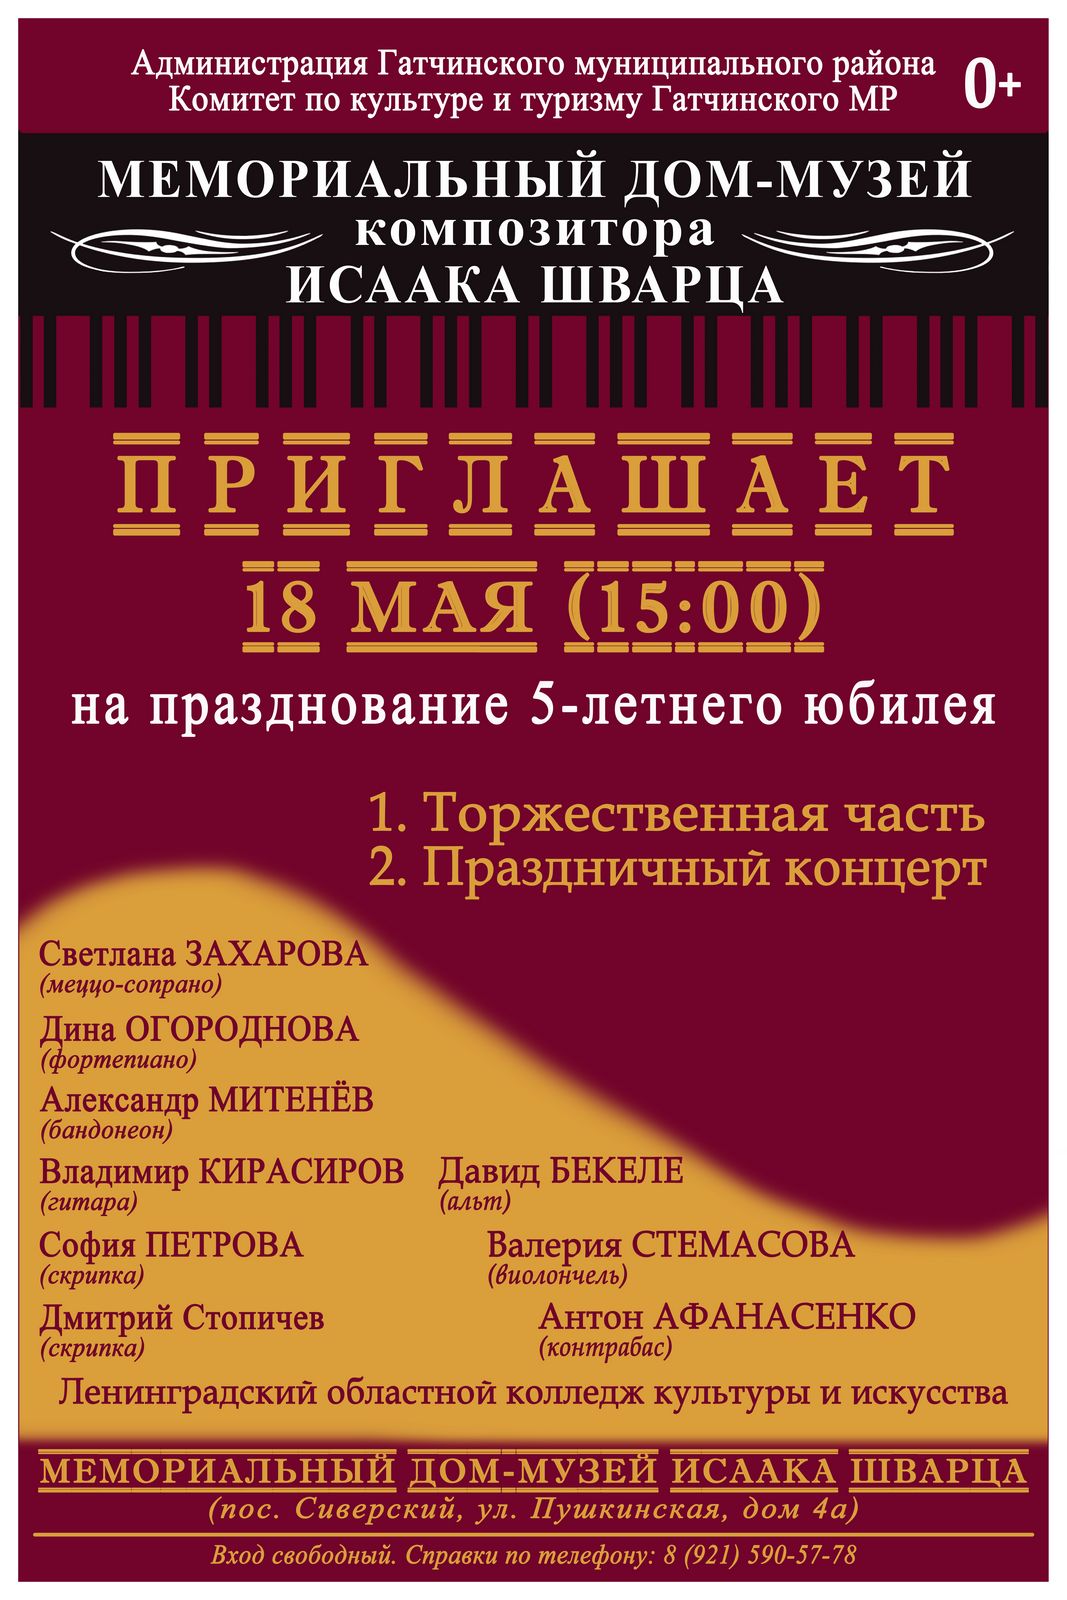 18 мая - день открытия музея композитора Исаака Шварца
http://museum-schvarz.ru